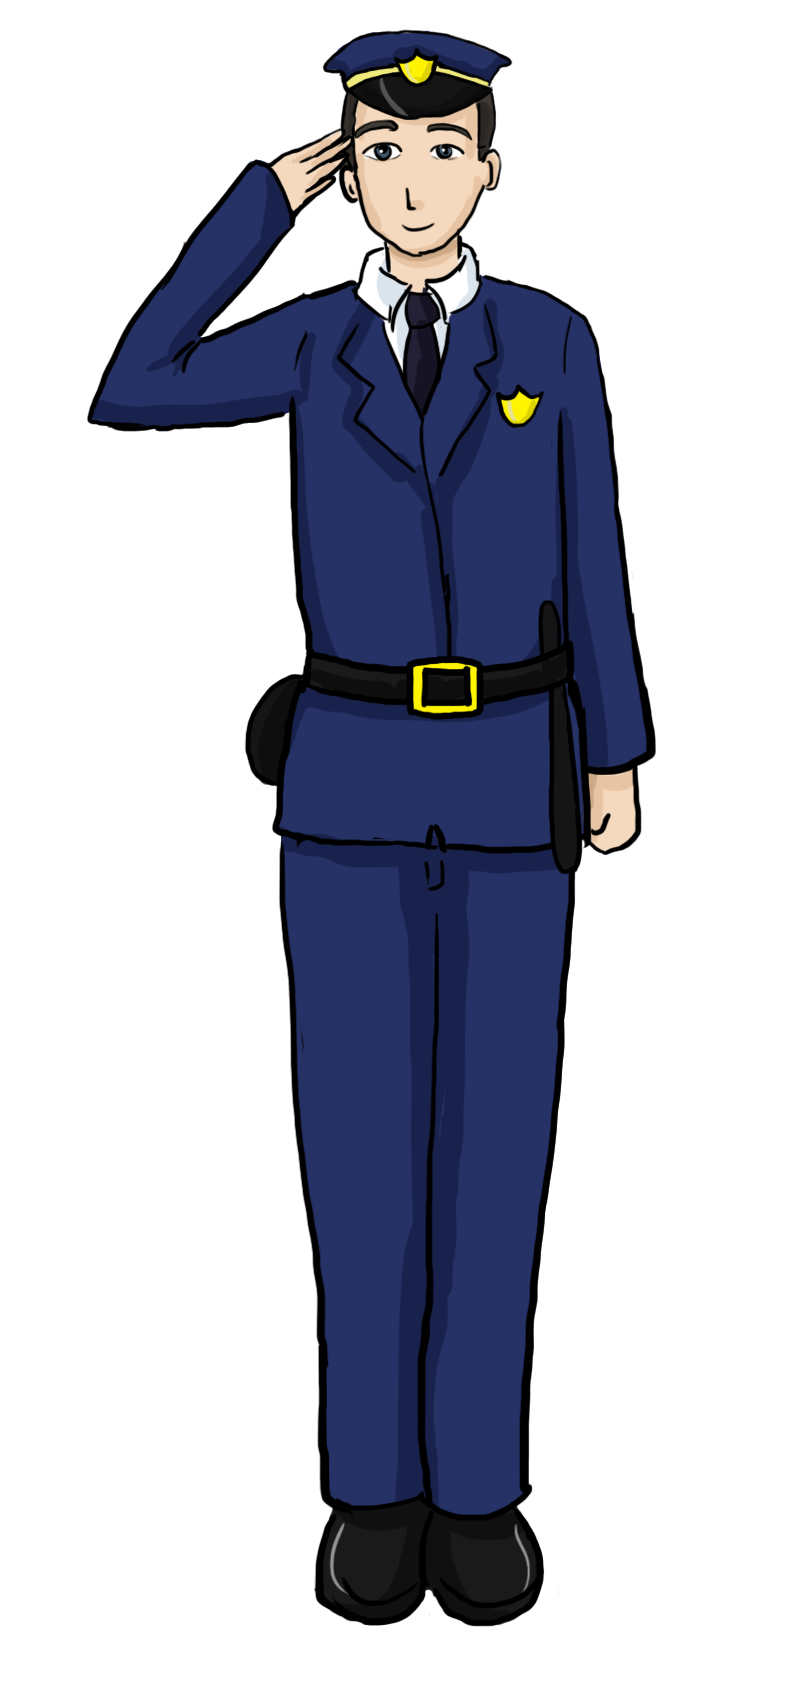 Clip art police officer uniform clipart 2